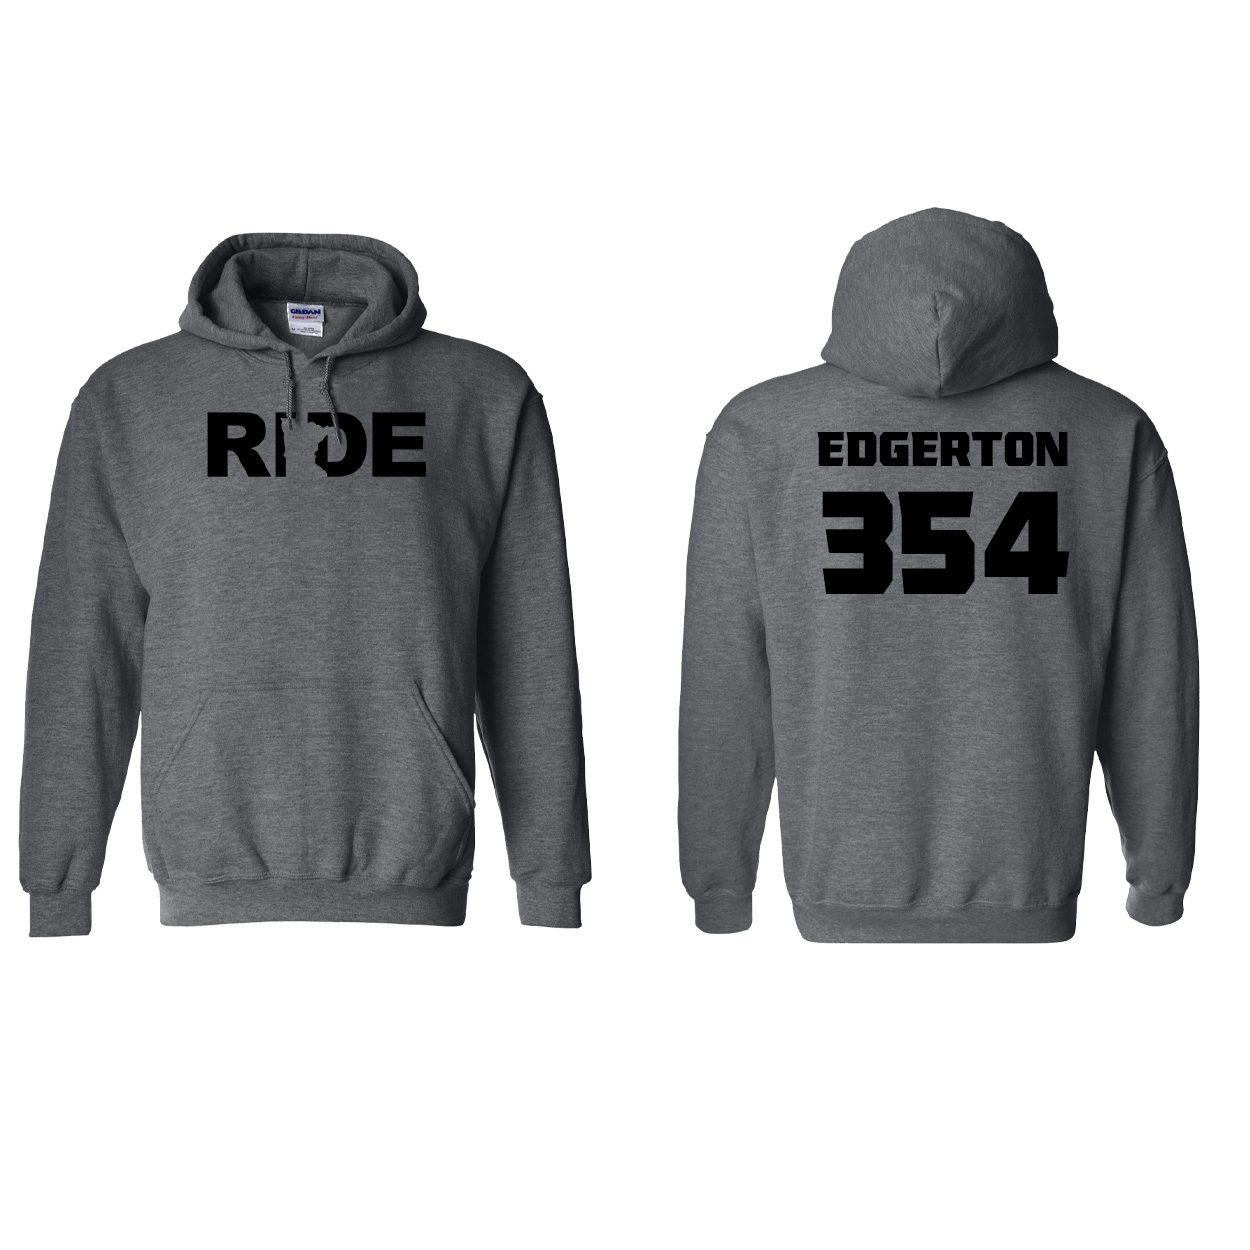 FXR BMX Race Team Classic Athlete Support Sweatshirt EDGERTON #354 Dark Heather (Black Logo)